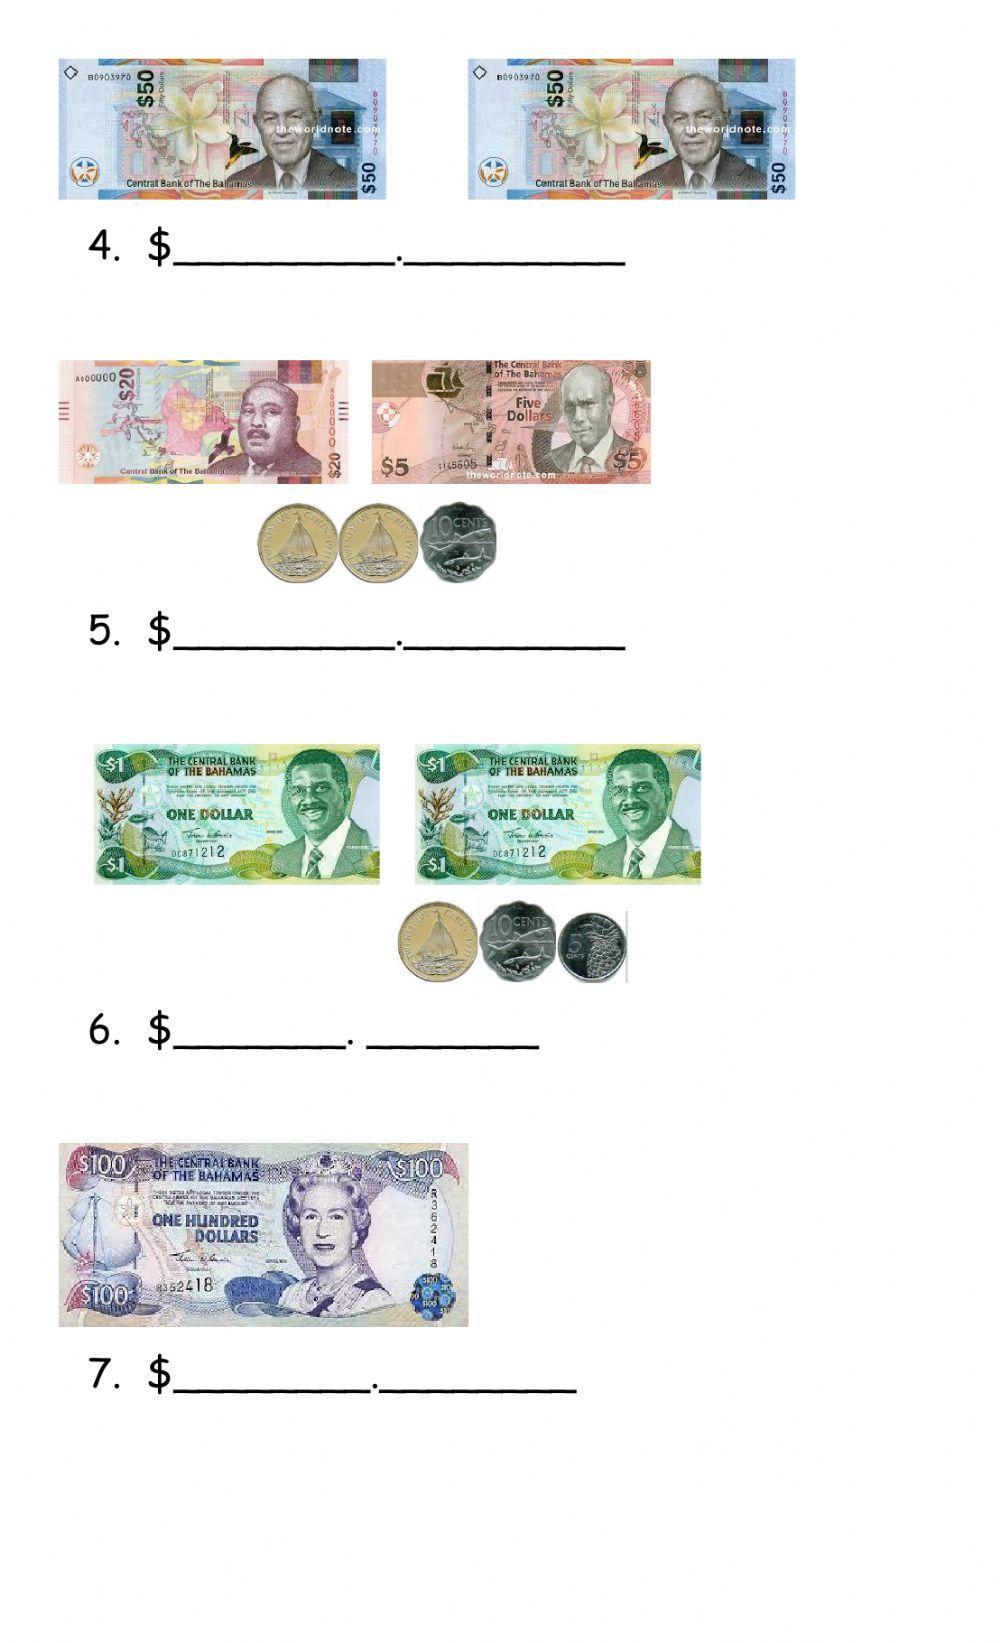 Counting Bahamian Bills and Coins